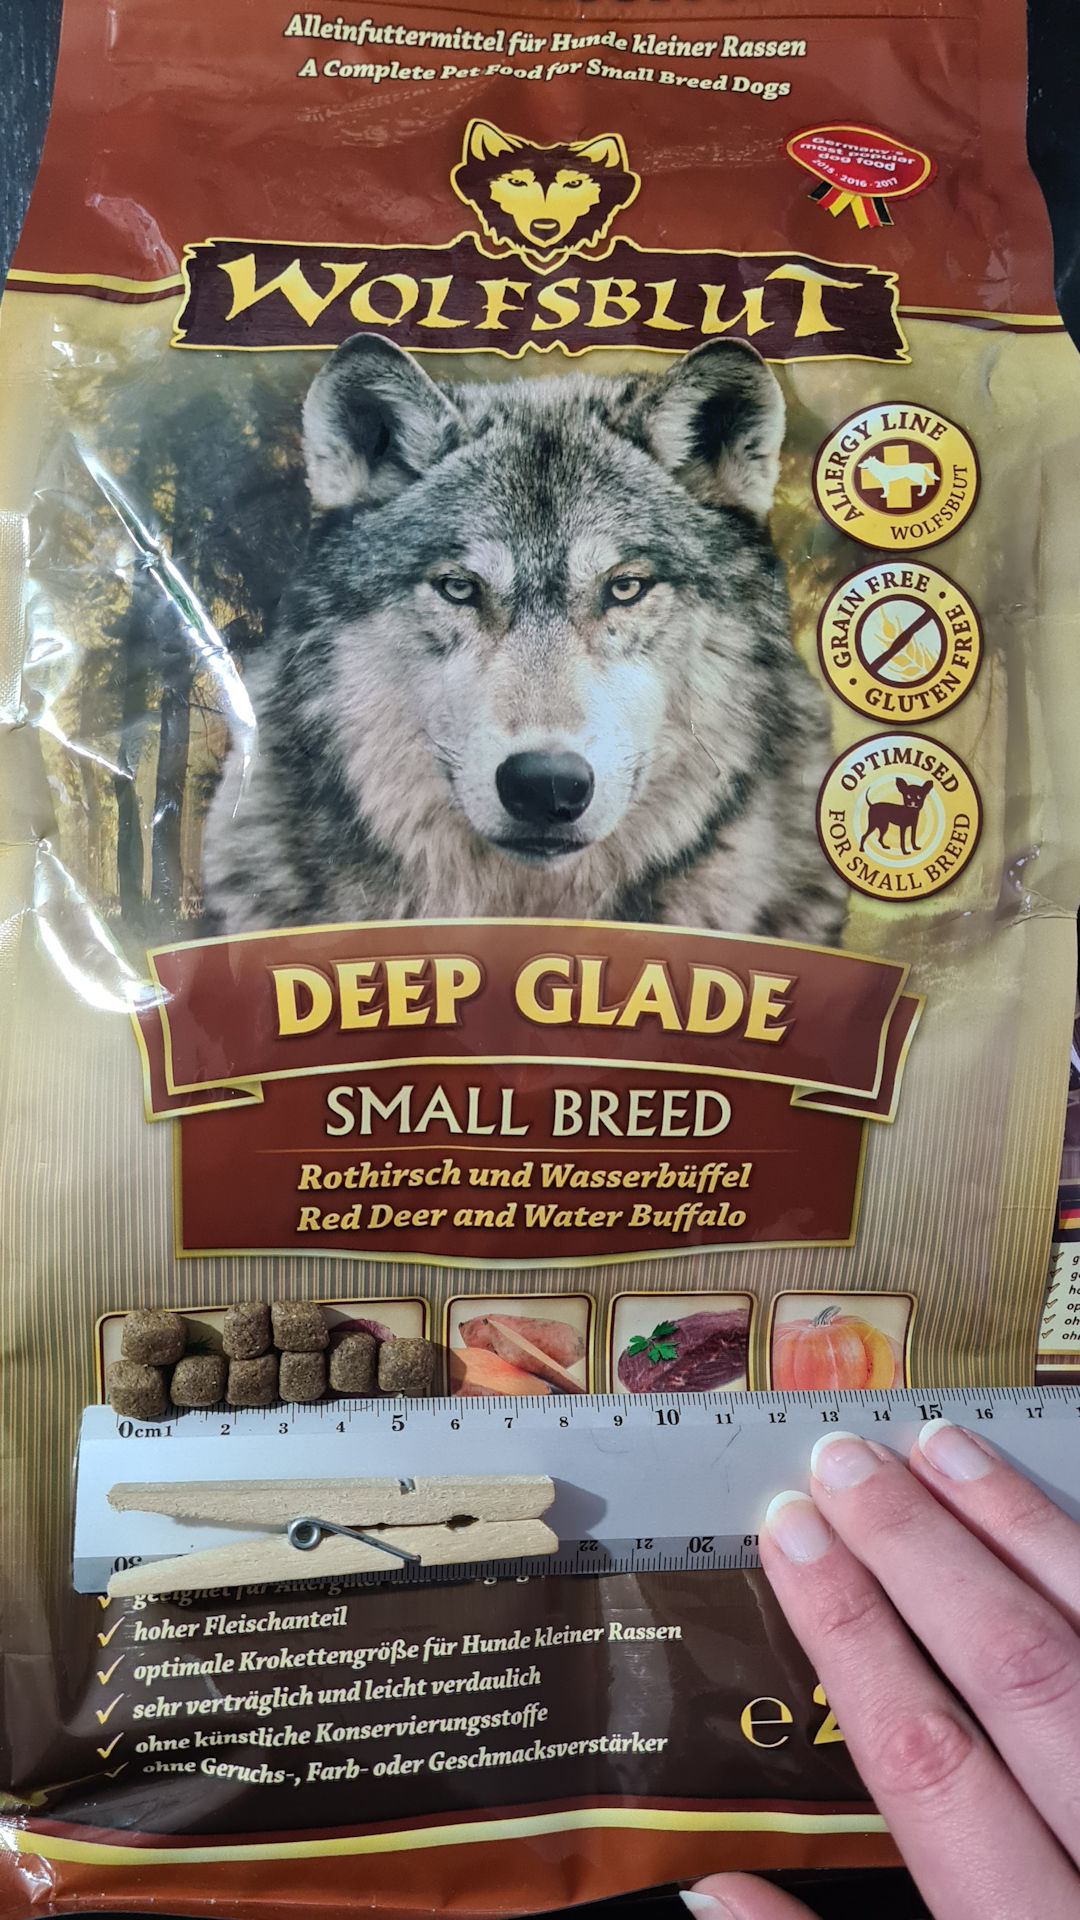 Brokken – Wolfsblut Deep Glade small breed